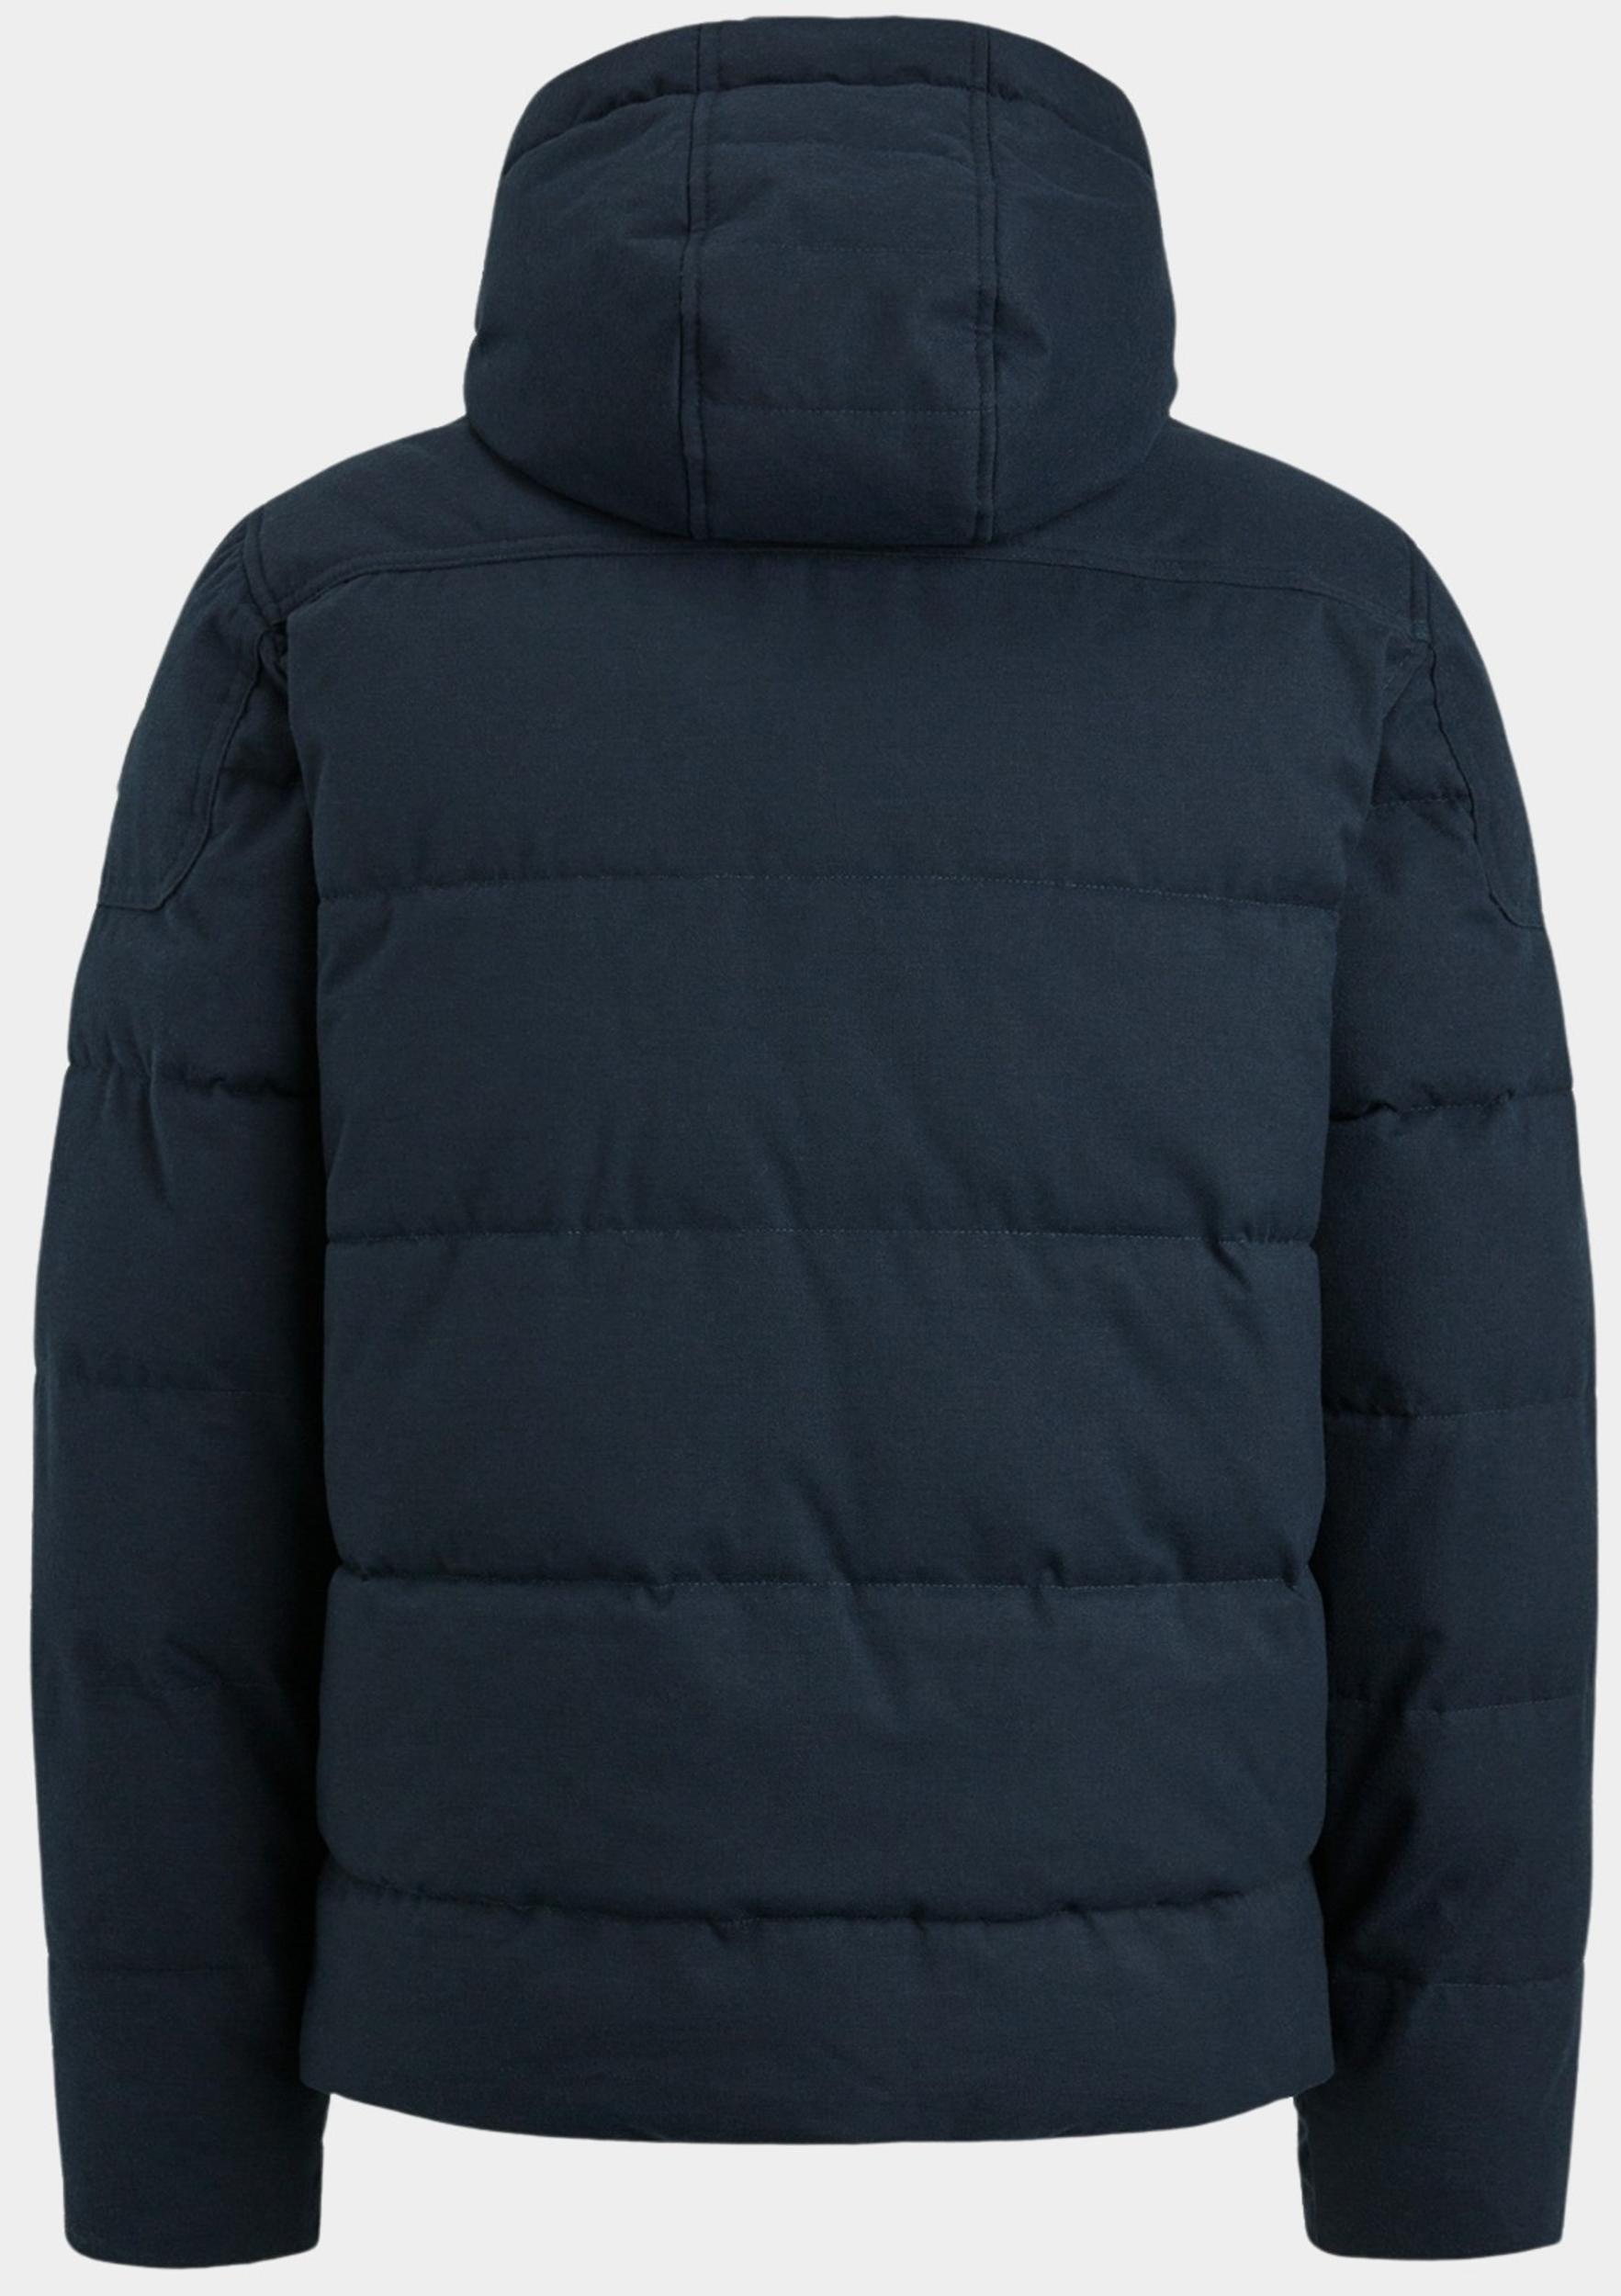 Vanguard Winterjack Blauw Hooded jacket Wooltech Roost VJA2309180/5281